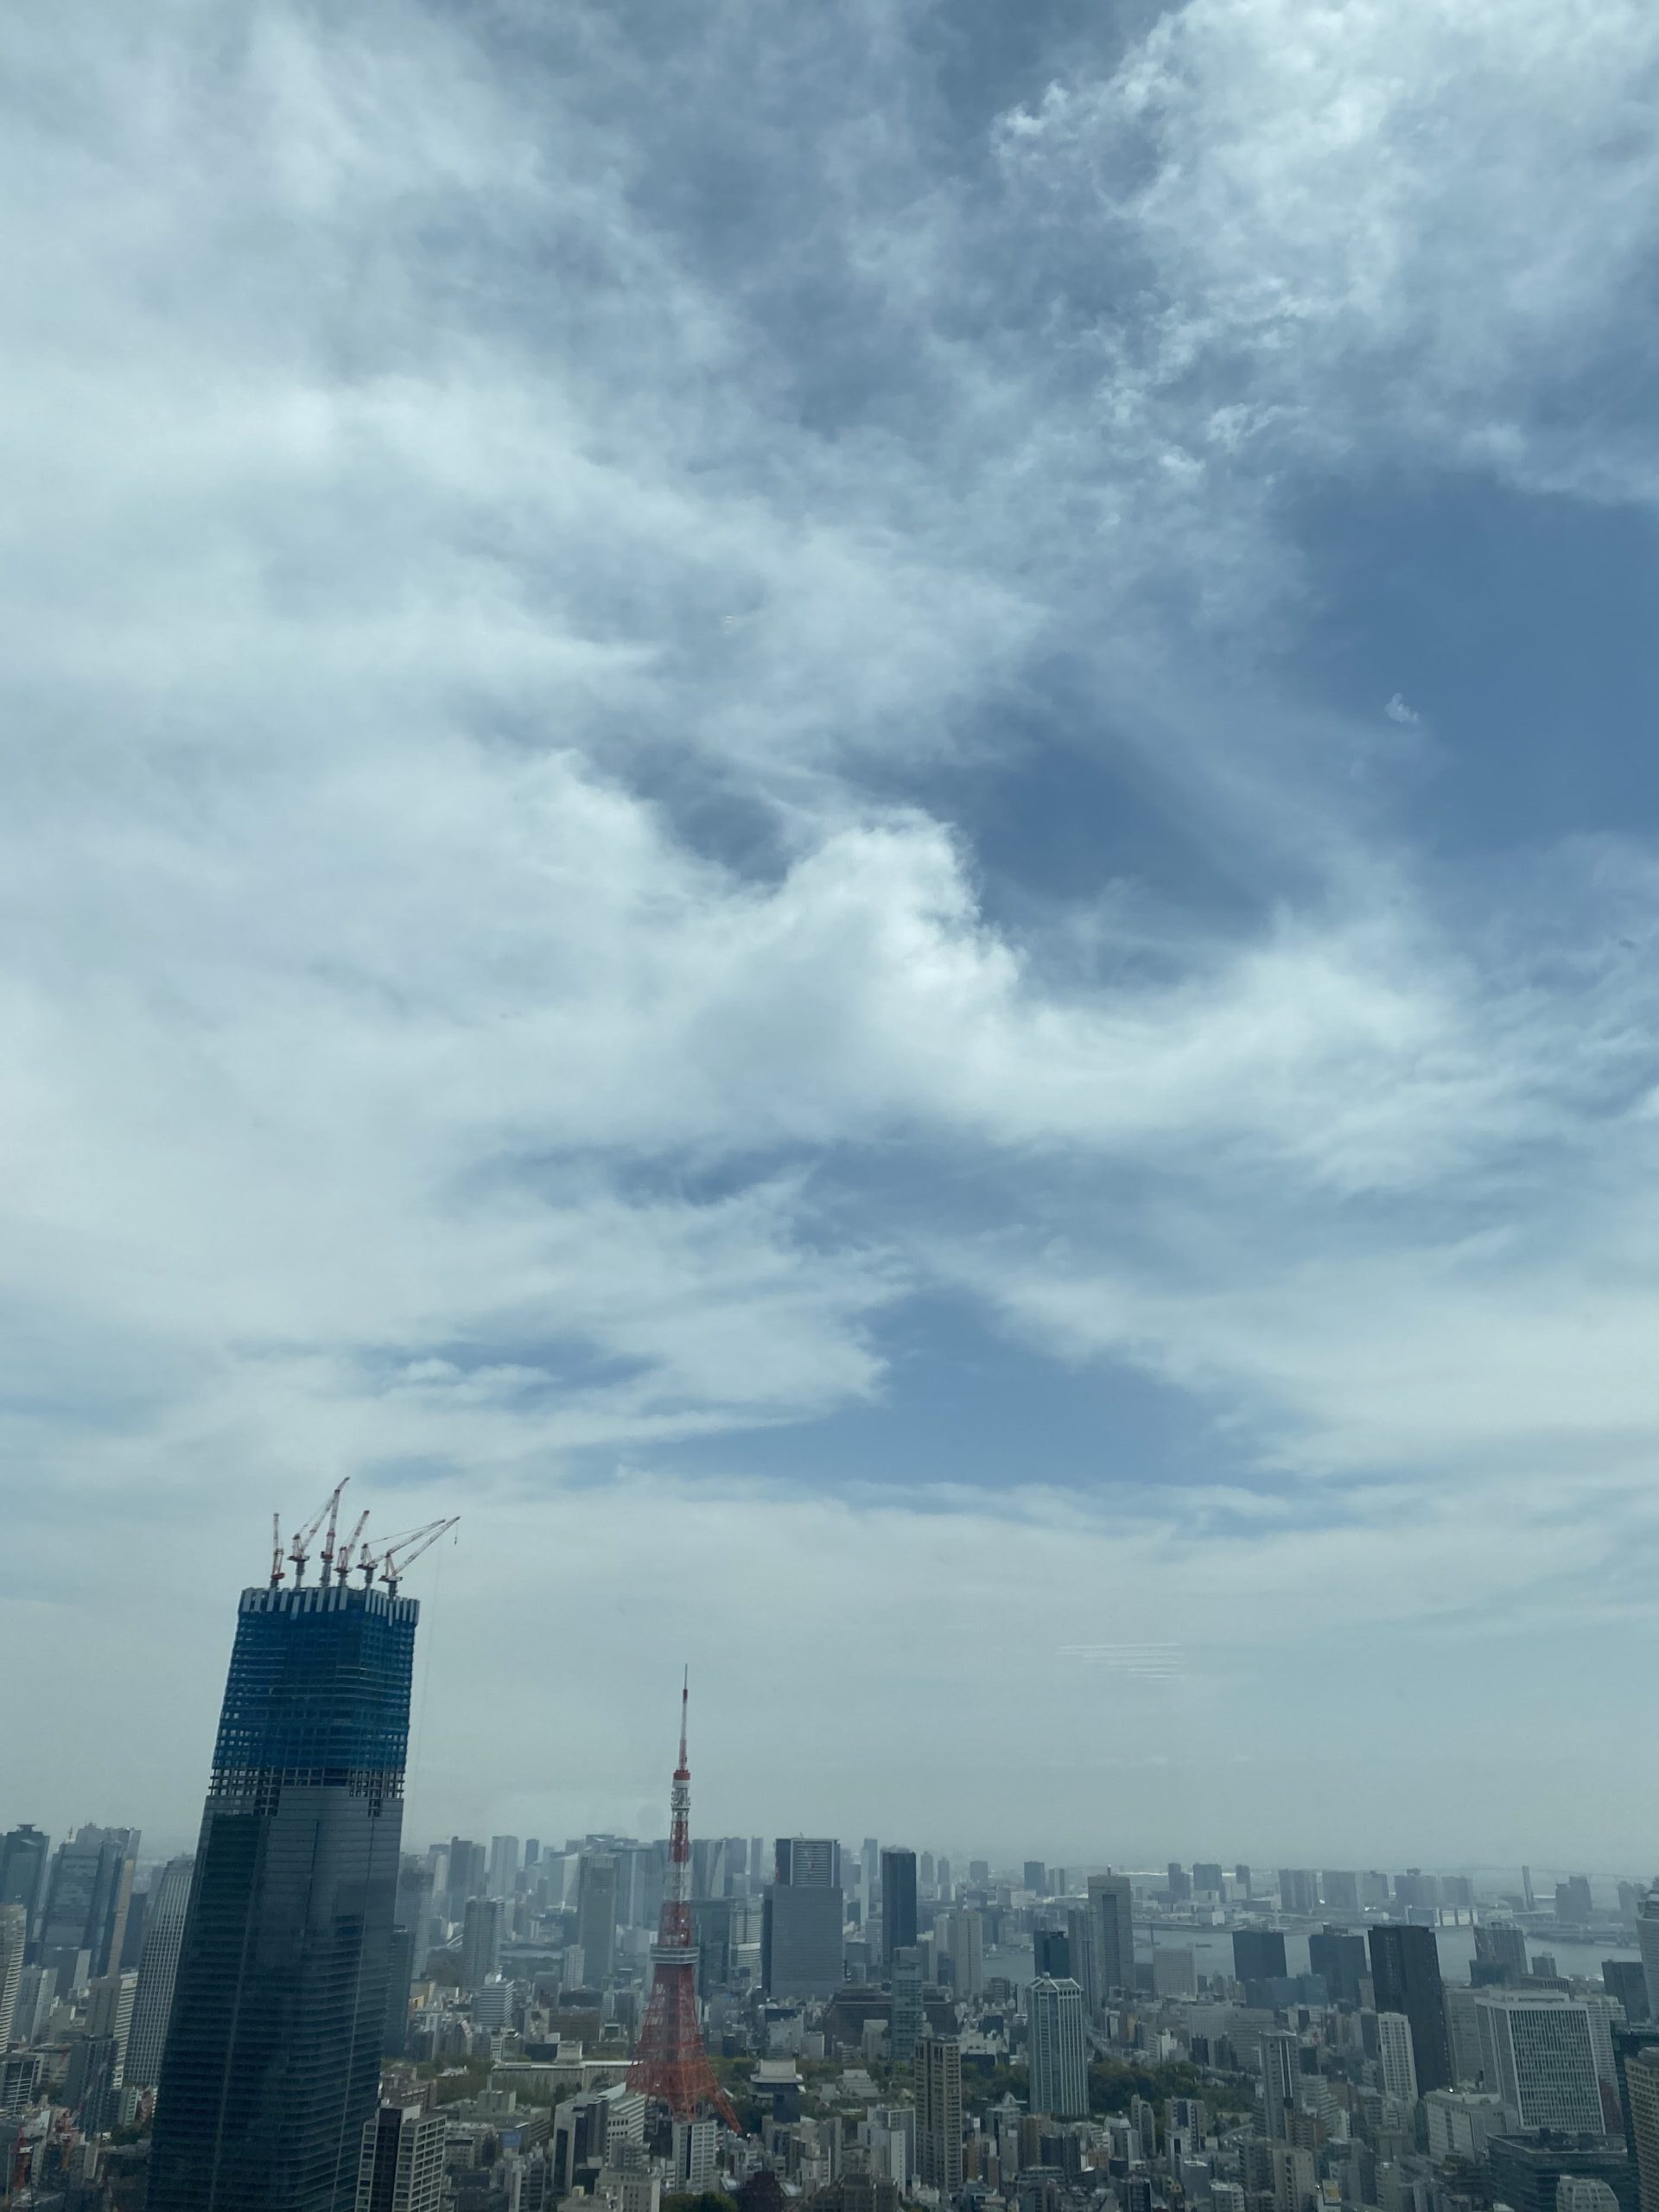 The sky in Tokyo (around Roppoingi area) photo by Kay Koyama